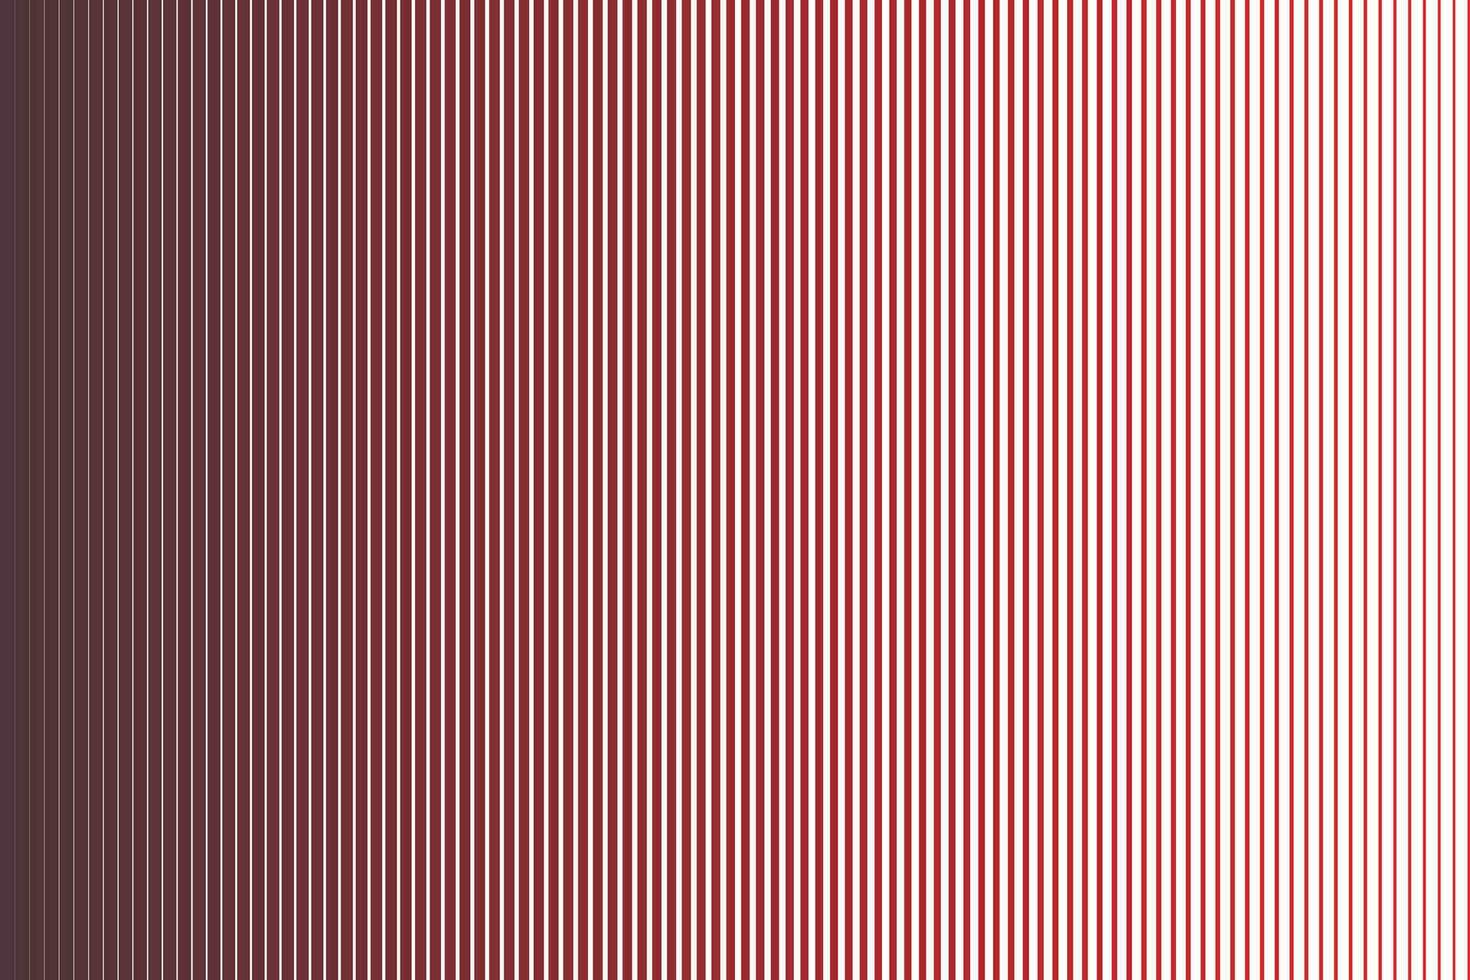 Vertical speed line halftone gradient line pattern background. vector